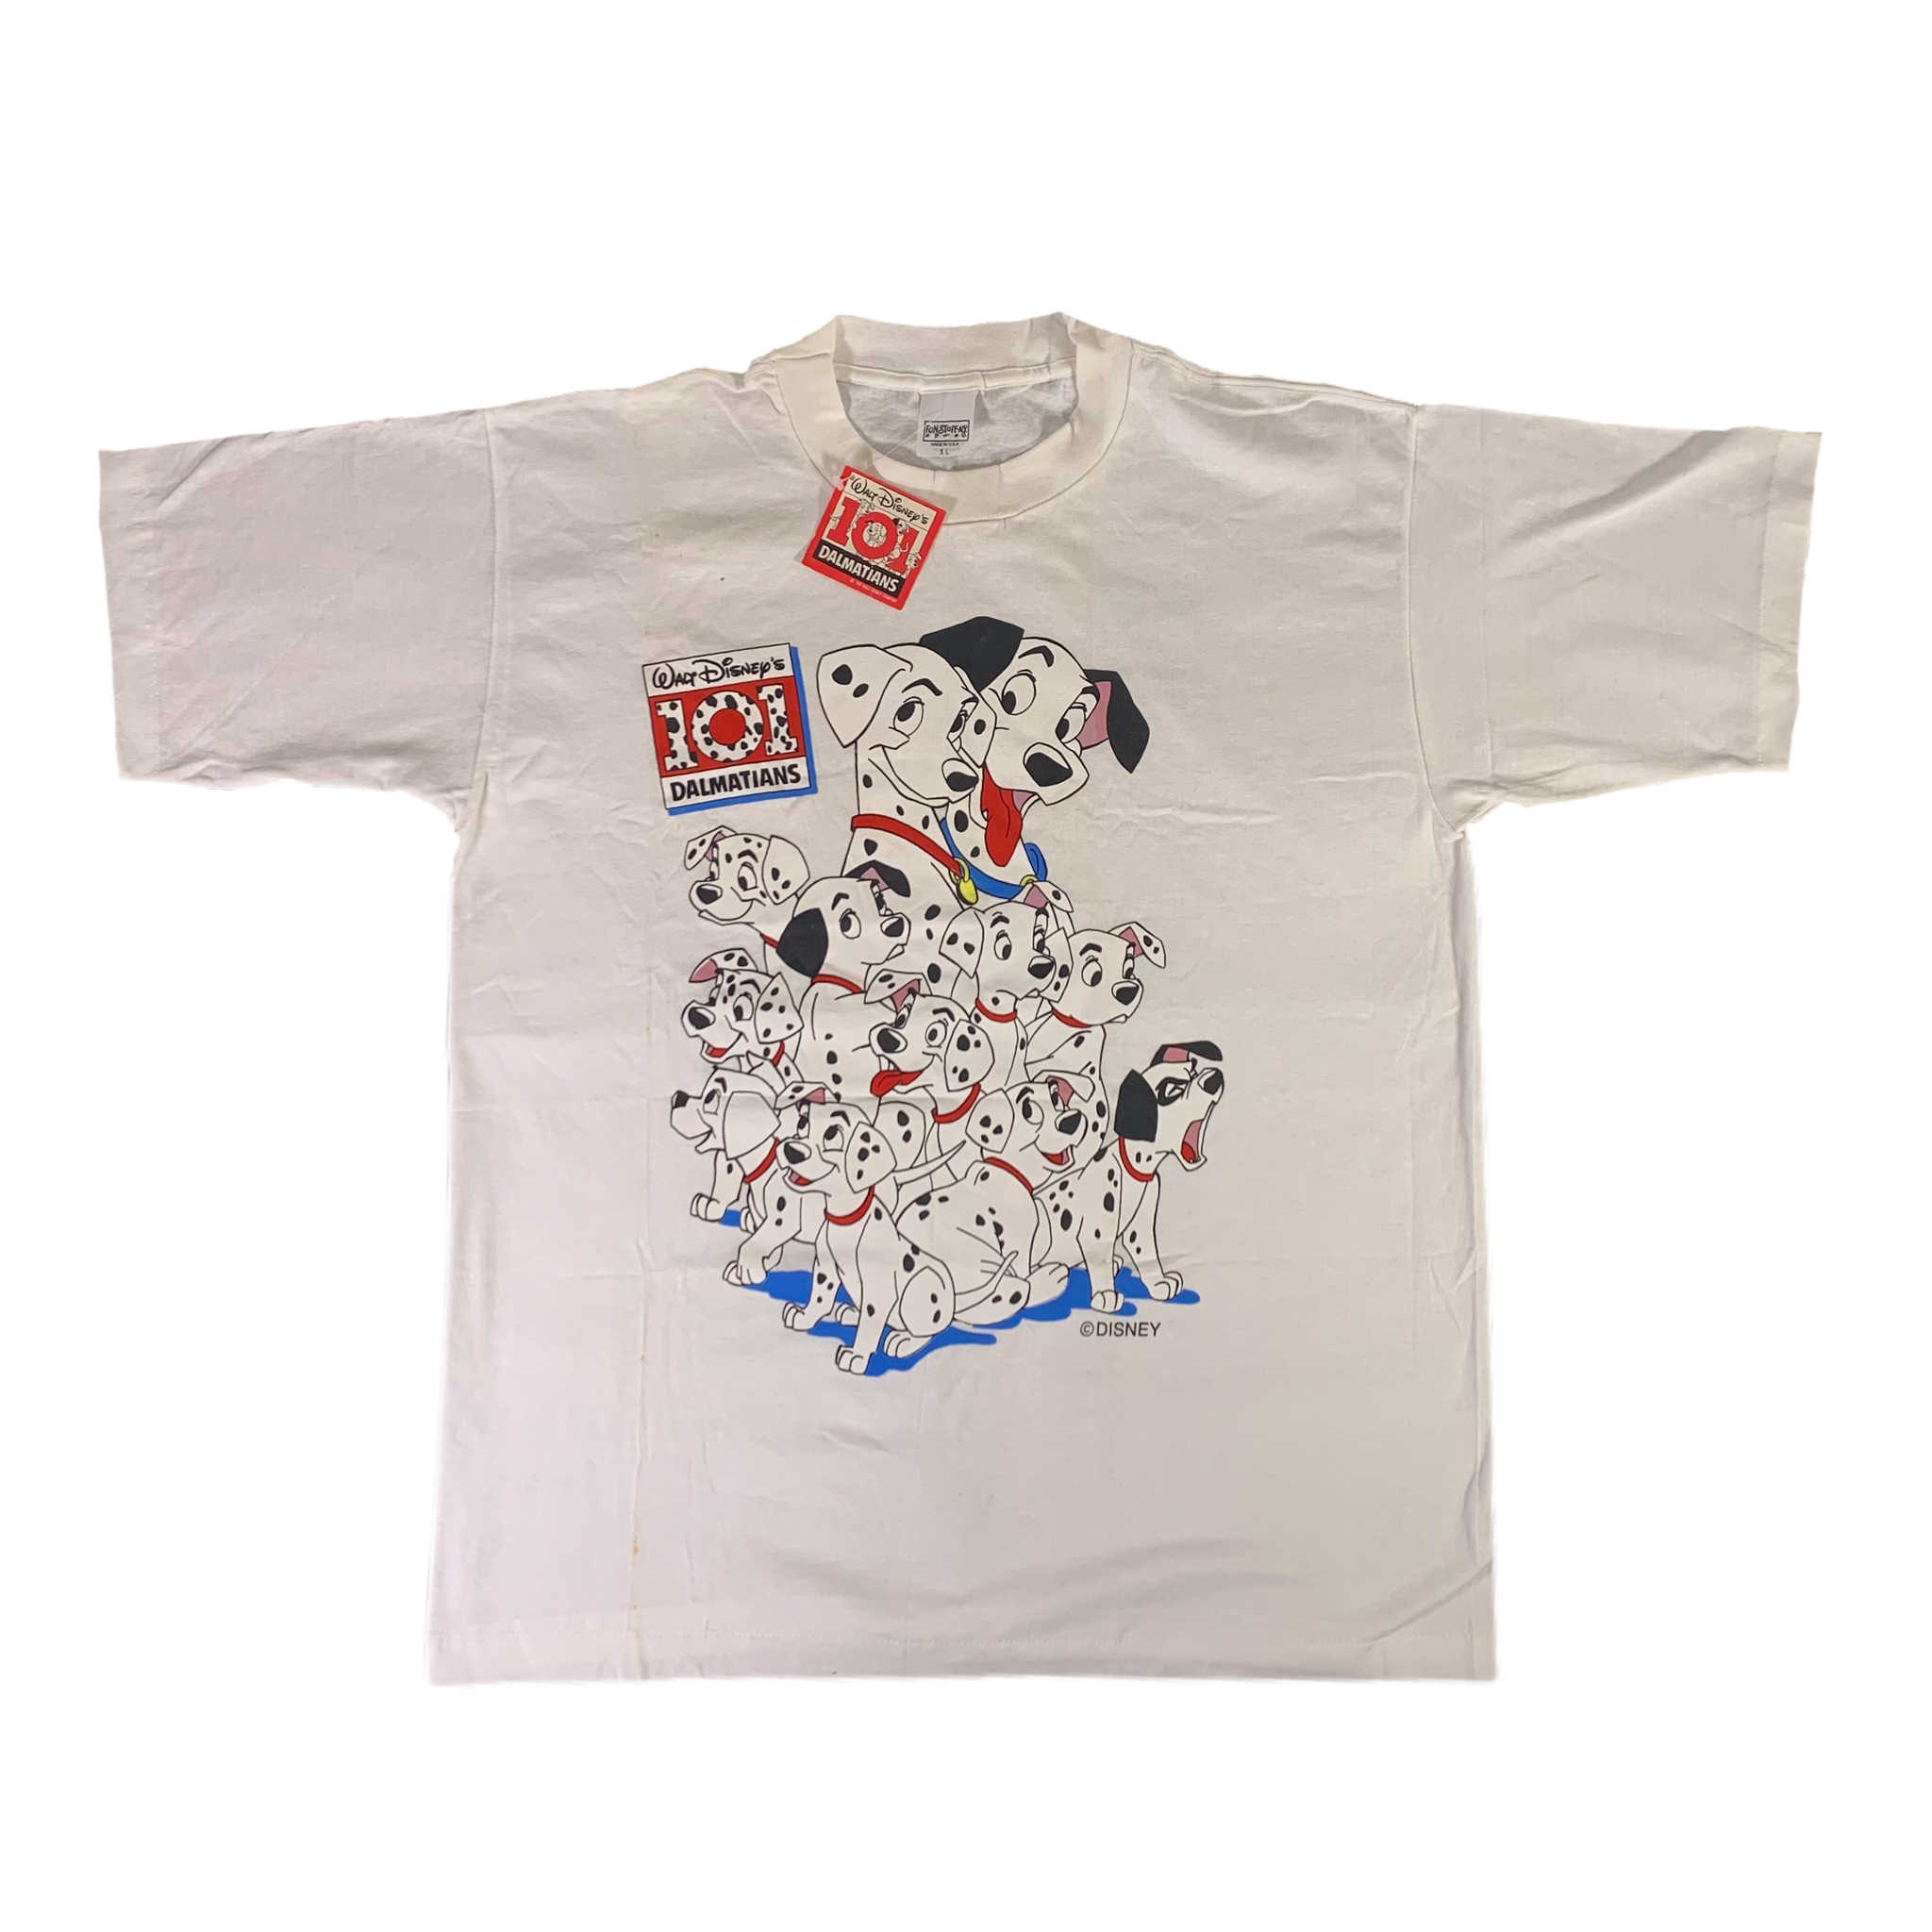 101 dalmatians shirt